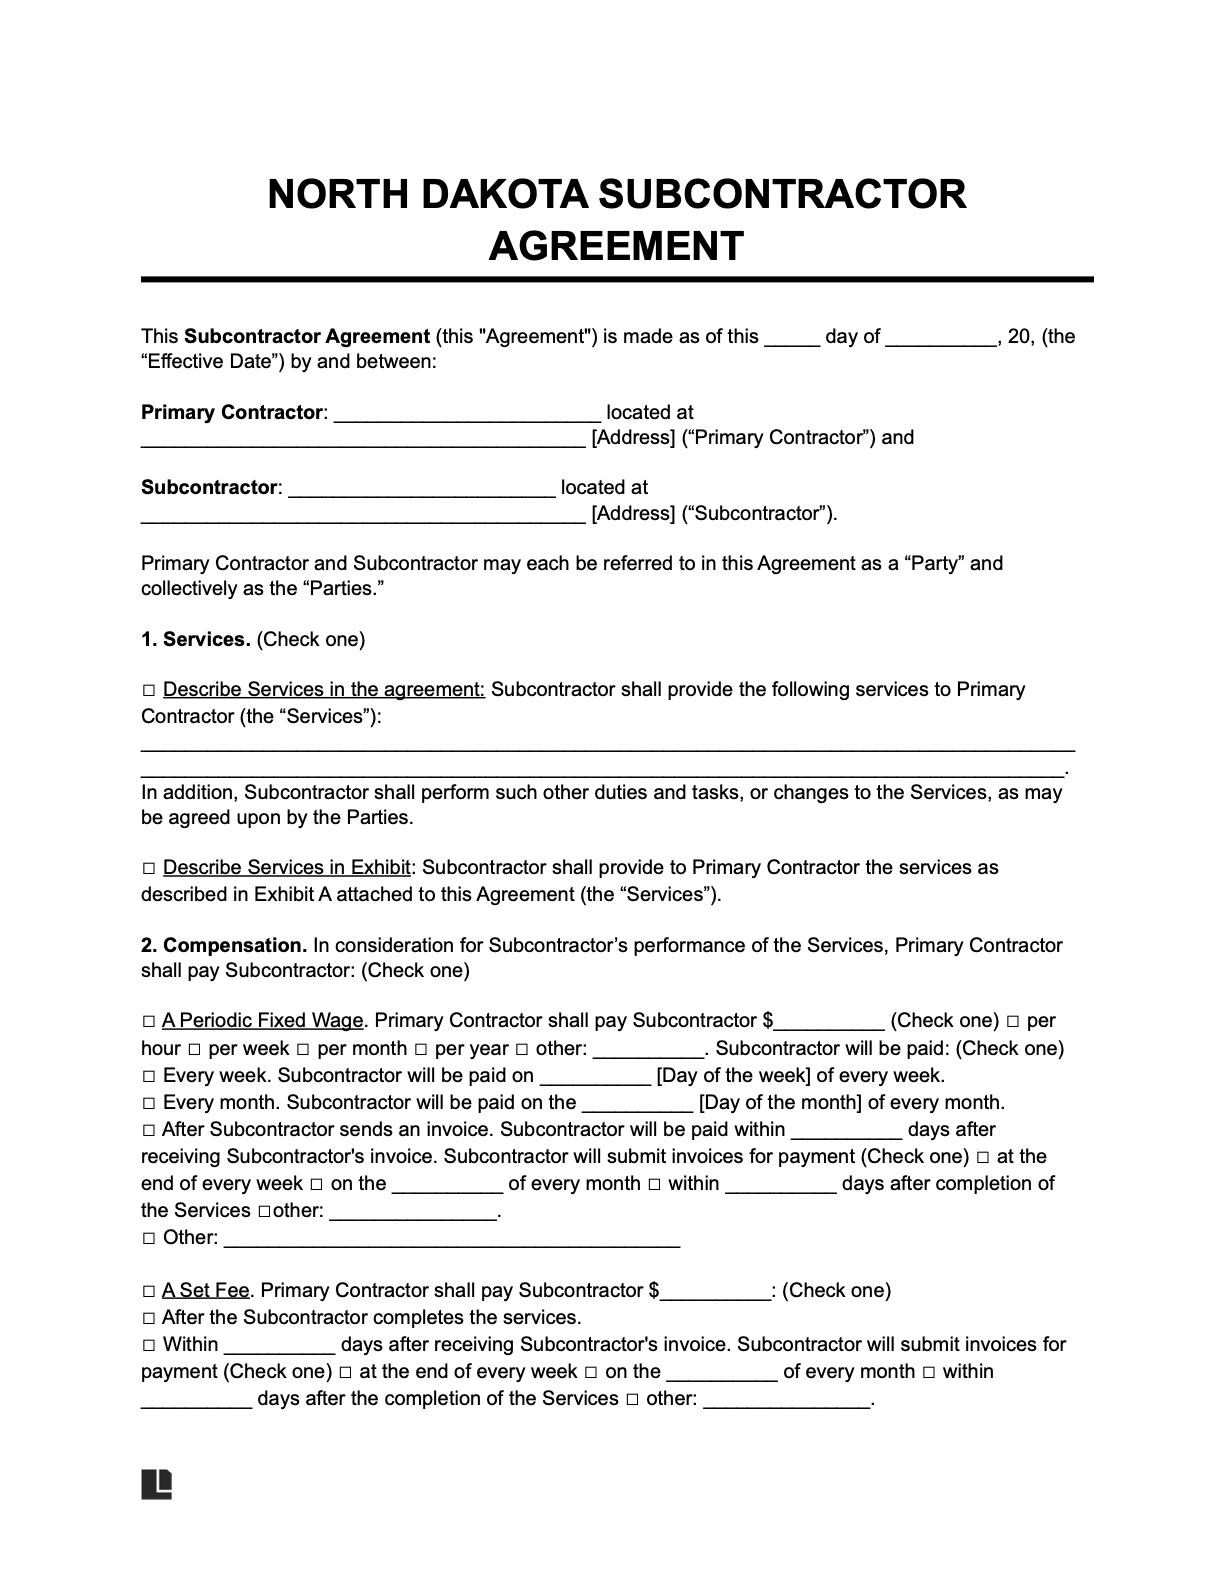 north dakota subcontractor agreement template